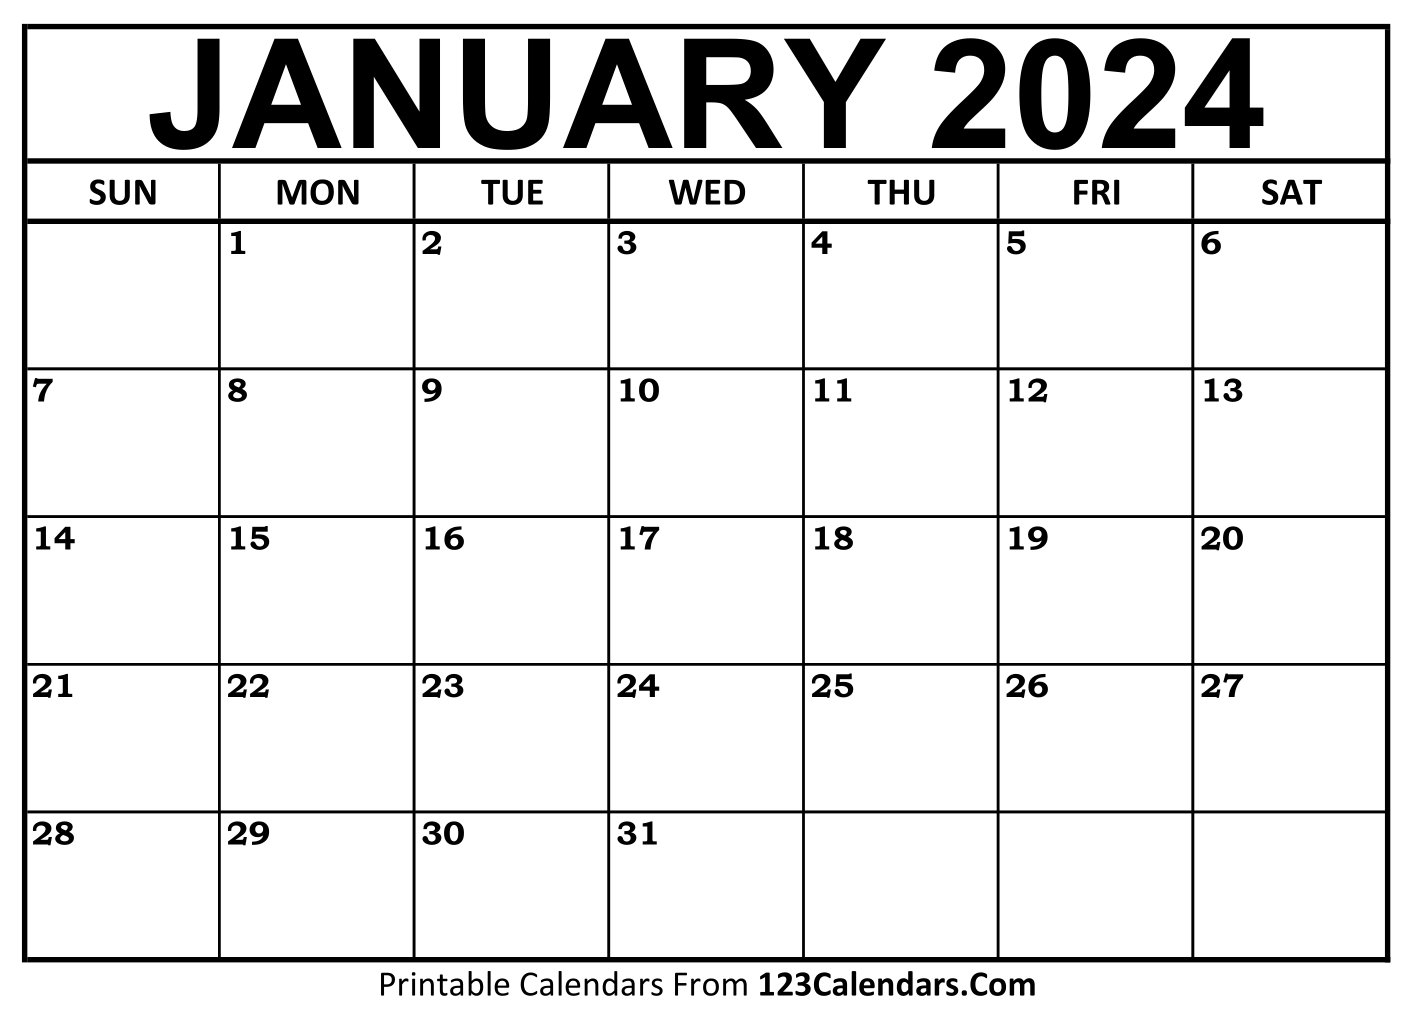 Printable January 2024 Calendar Templates - 123Calendars for Calendar 2024 Printable January